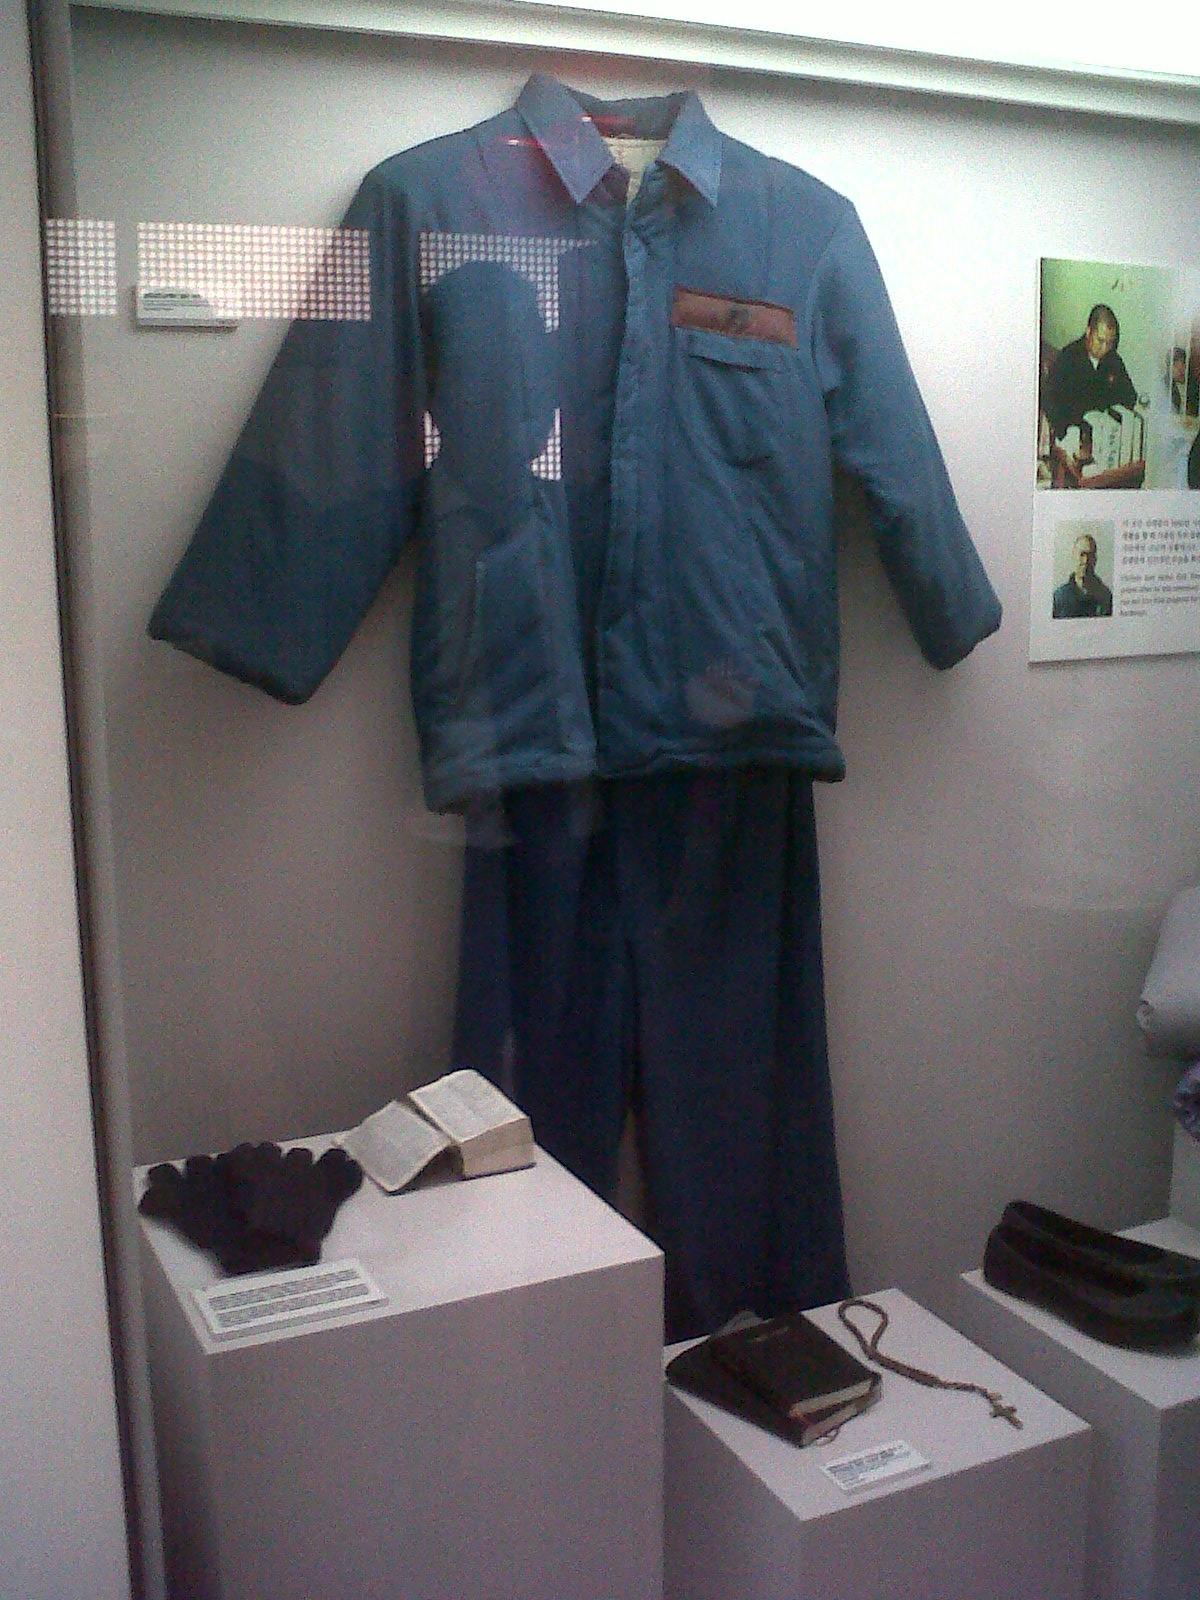 Kim Dae Jung Library - his prison uniform